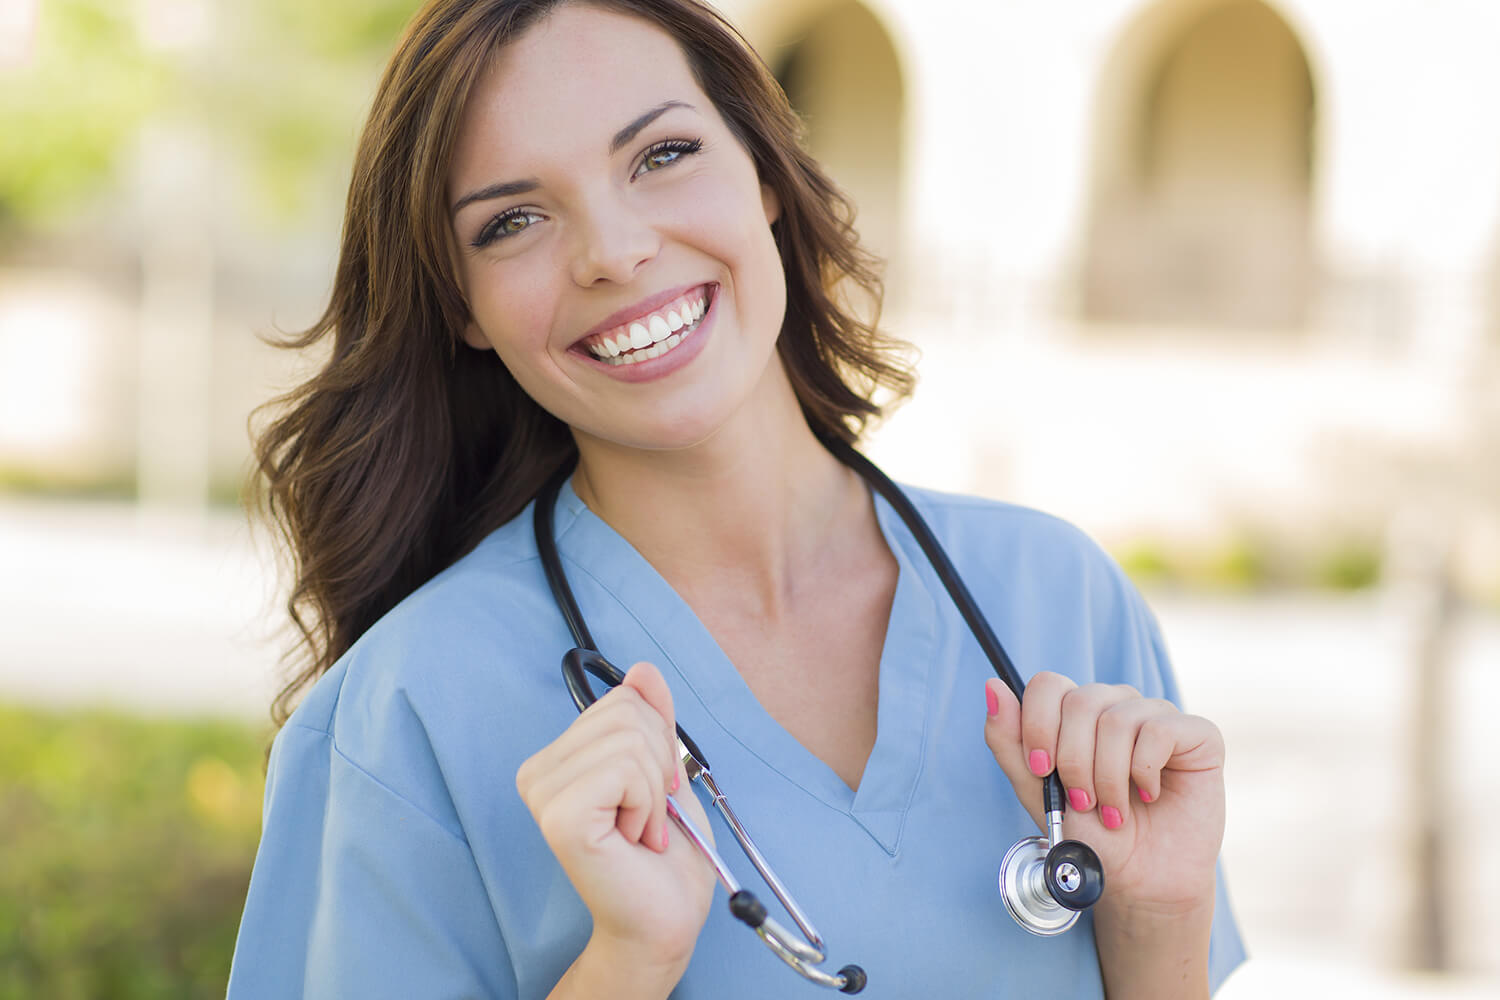 Female nurse in blue scrubs with stethoscope